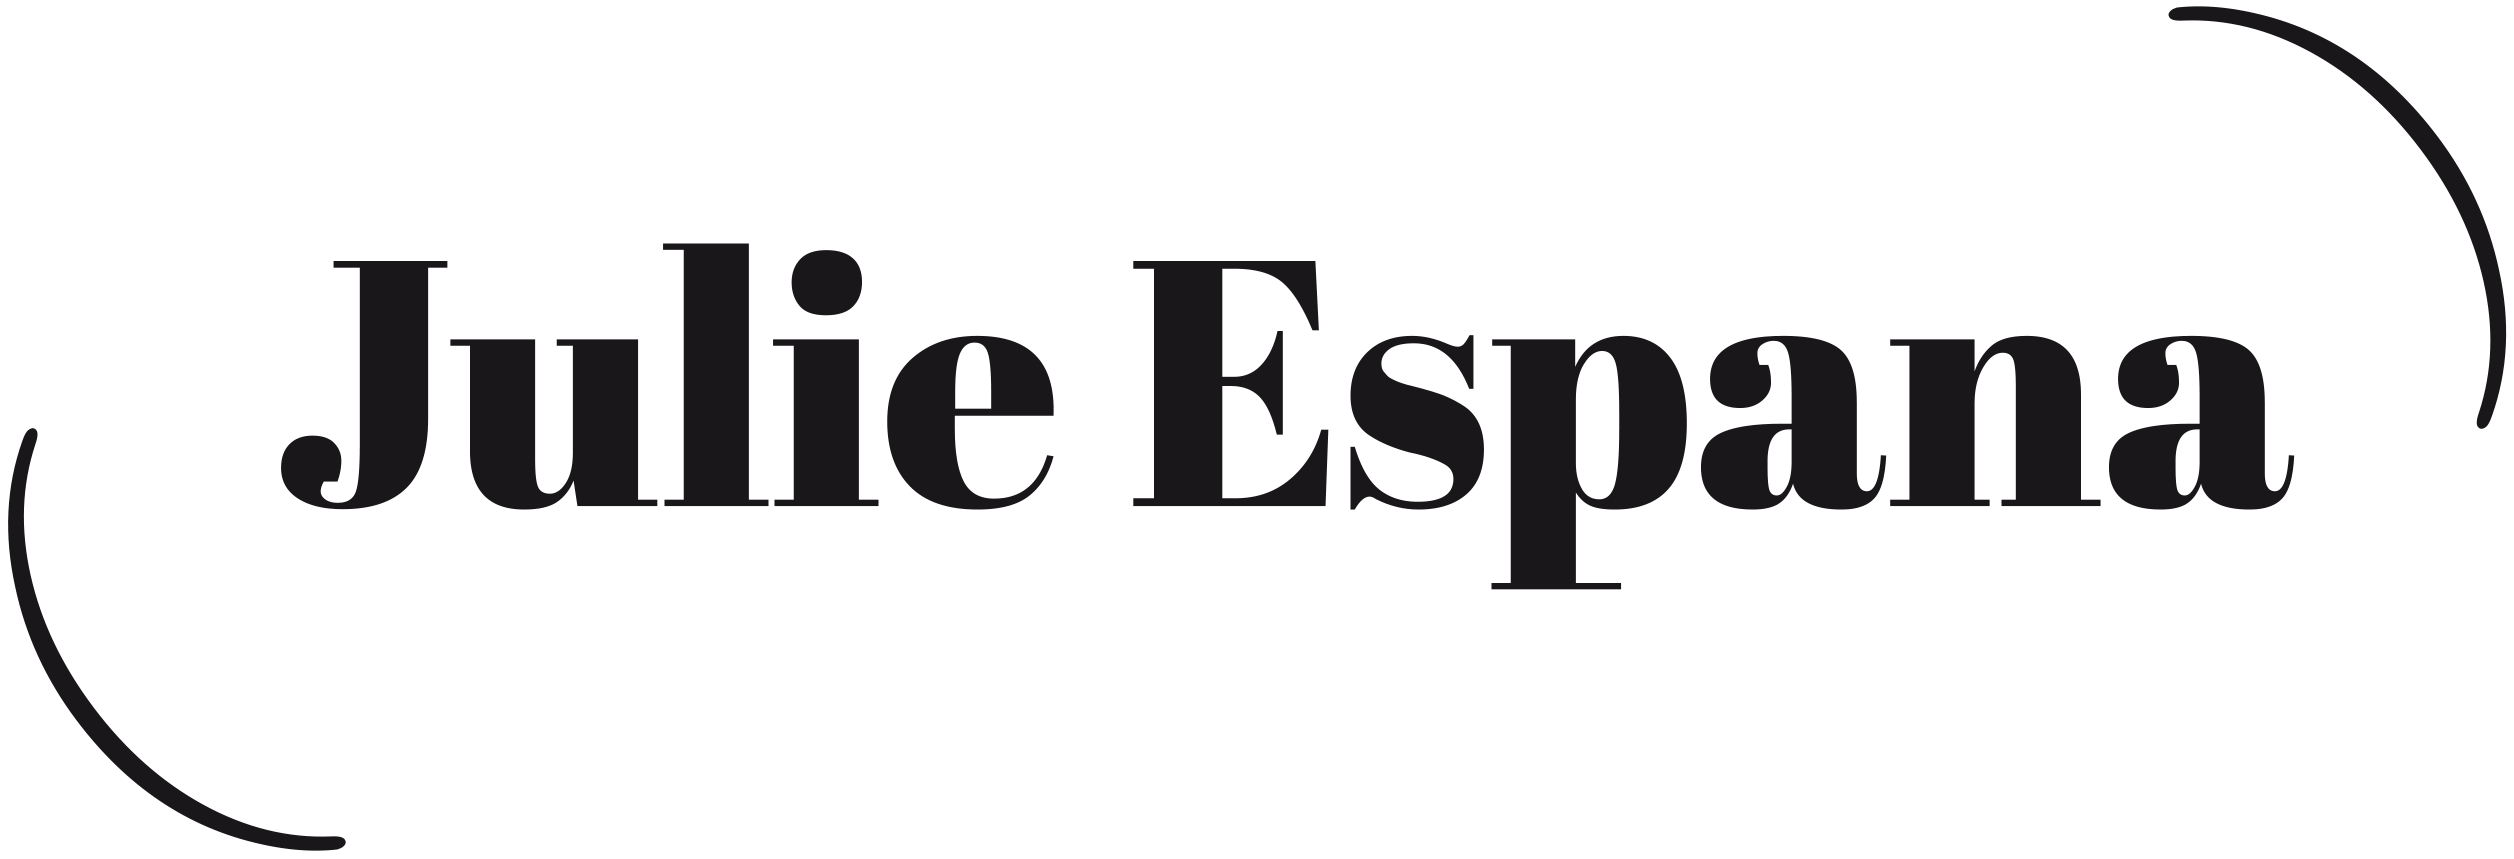 julie-espana-graphiste-lyon-logo-header